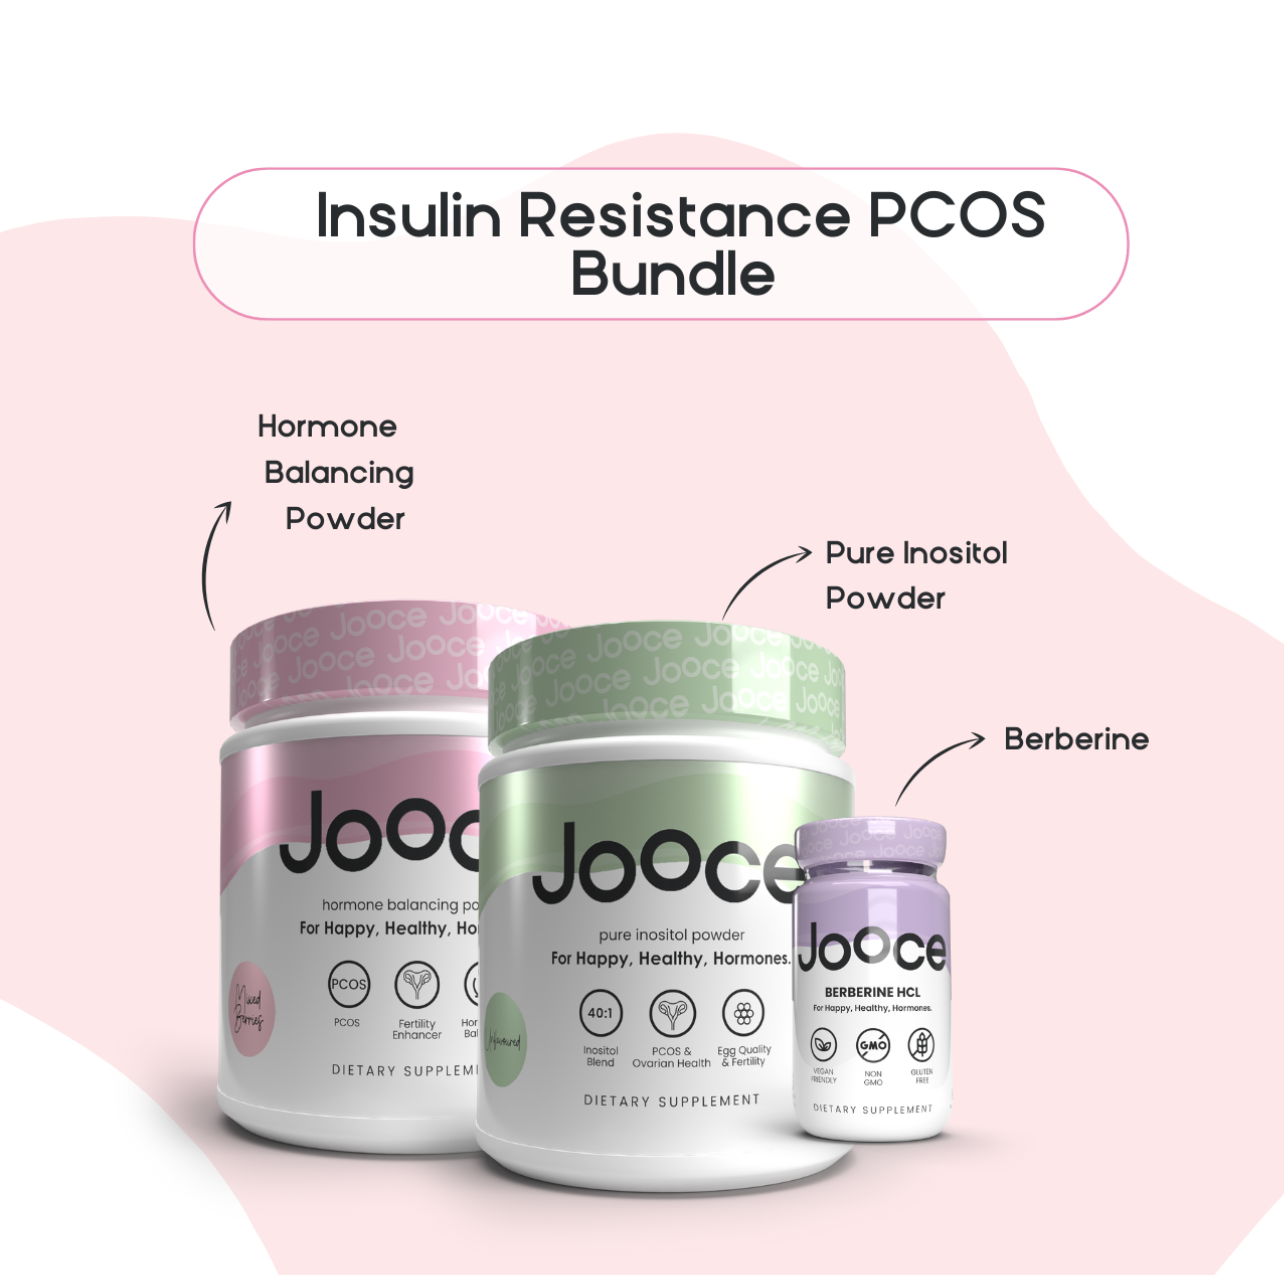 Insulin Resistance PCOS Bundle